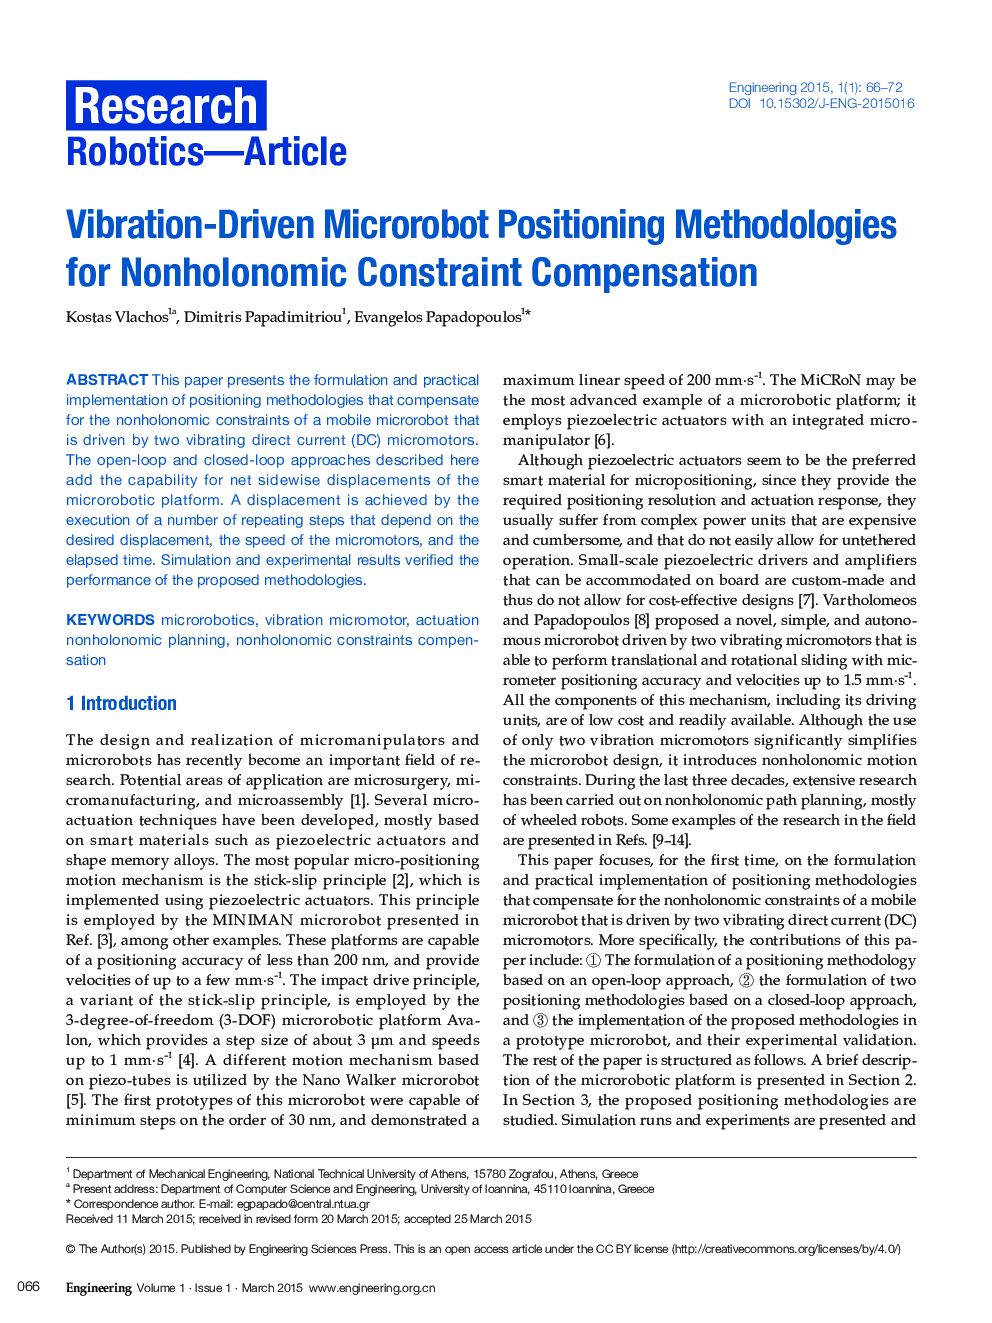 Vibration-Driven Microrobot Positioning Methodologies for Nonholonomic Constraint Compensation